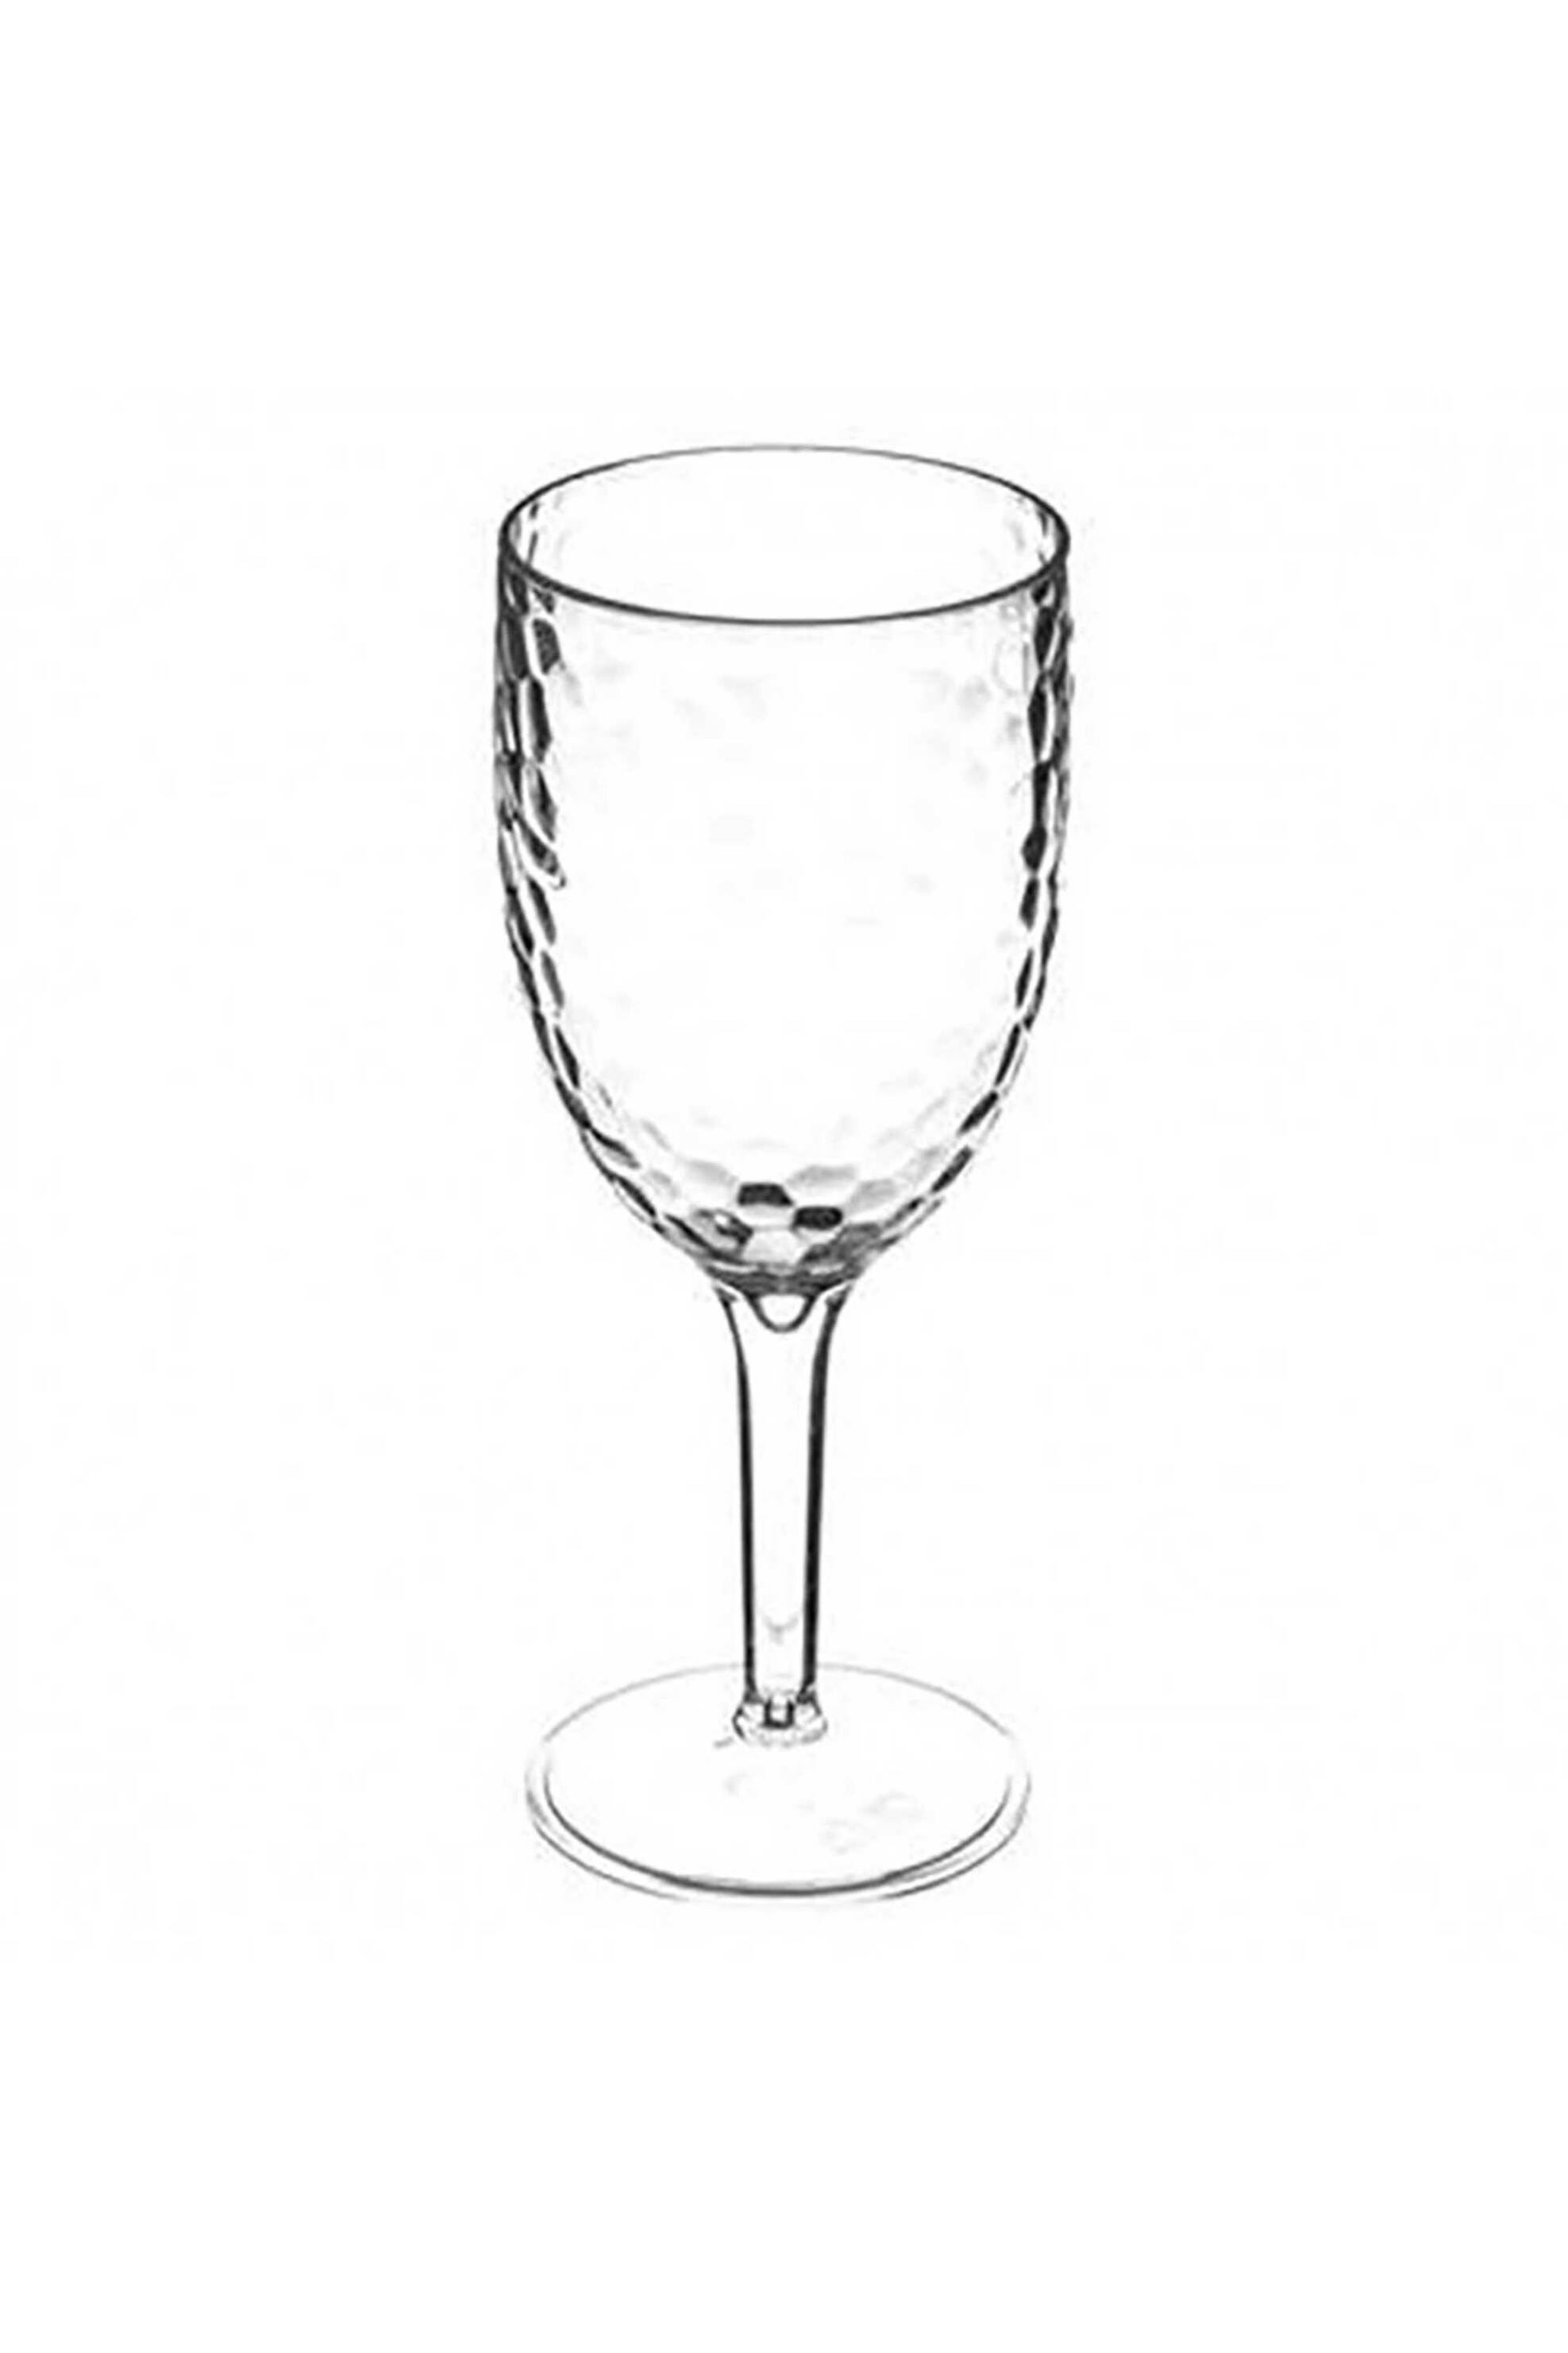 Home > ΚΟΥΖΙΝΑ > Υαλικά > Ποτήρια Marva ακρυλικό ποτήρι κρασιού με ανάγλυφο σχέδιο "Estiva" 350 ml - 3560239465249